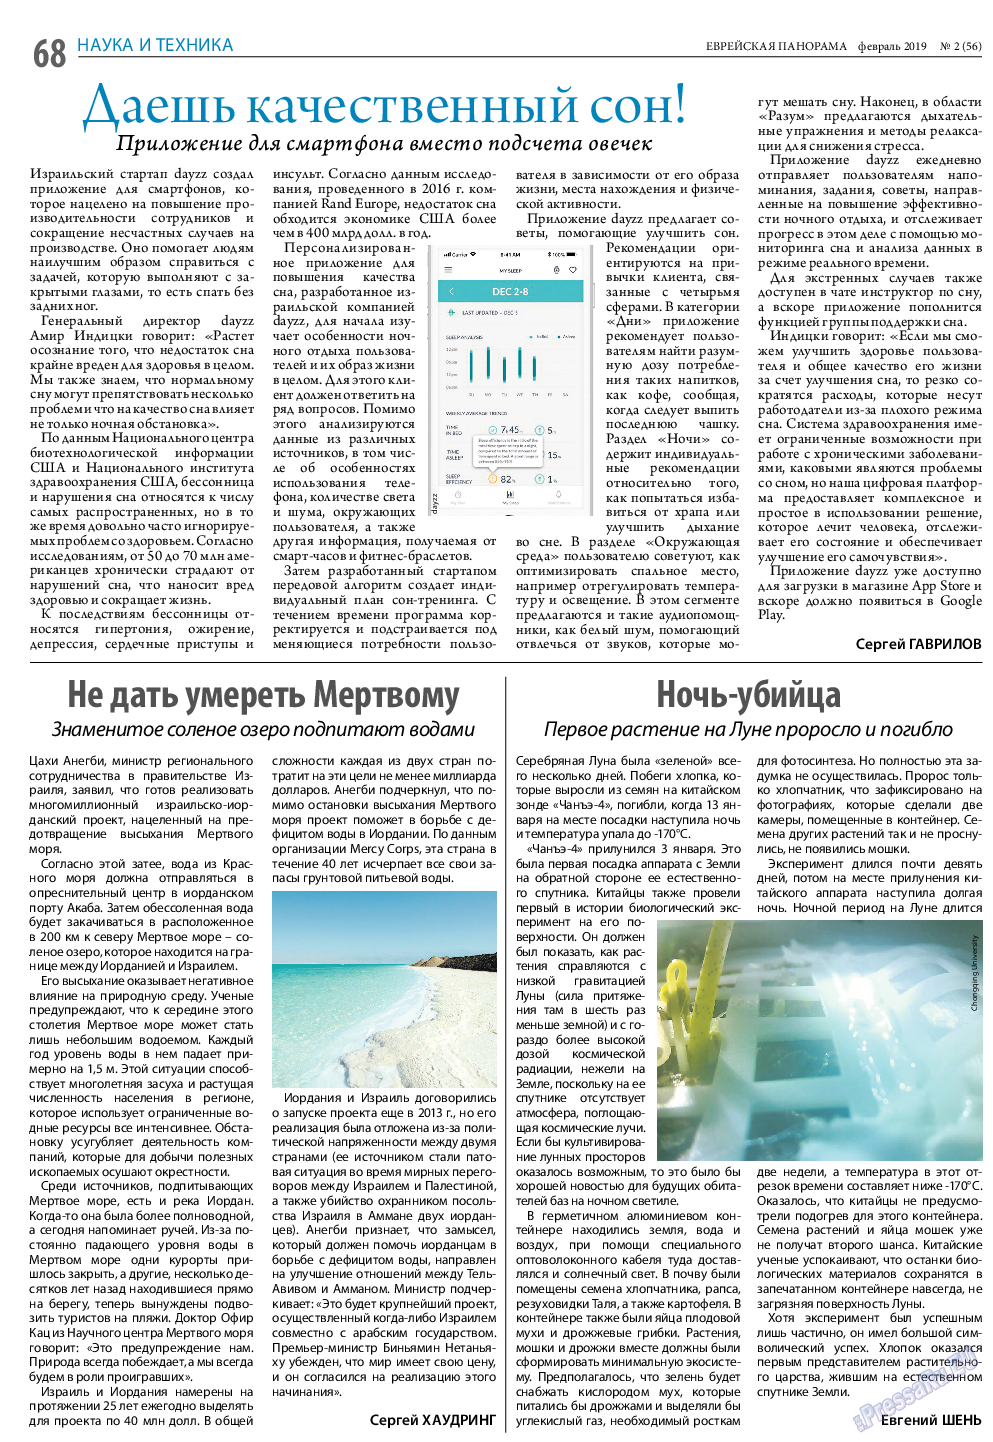 Еврейская панорама, газета. 2019 №2 стр.68